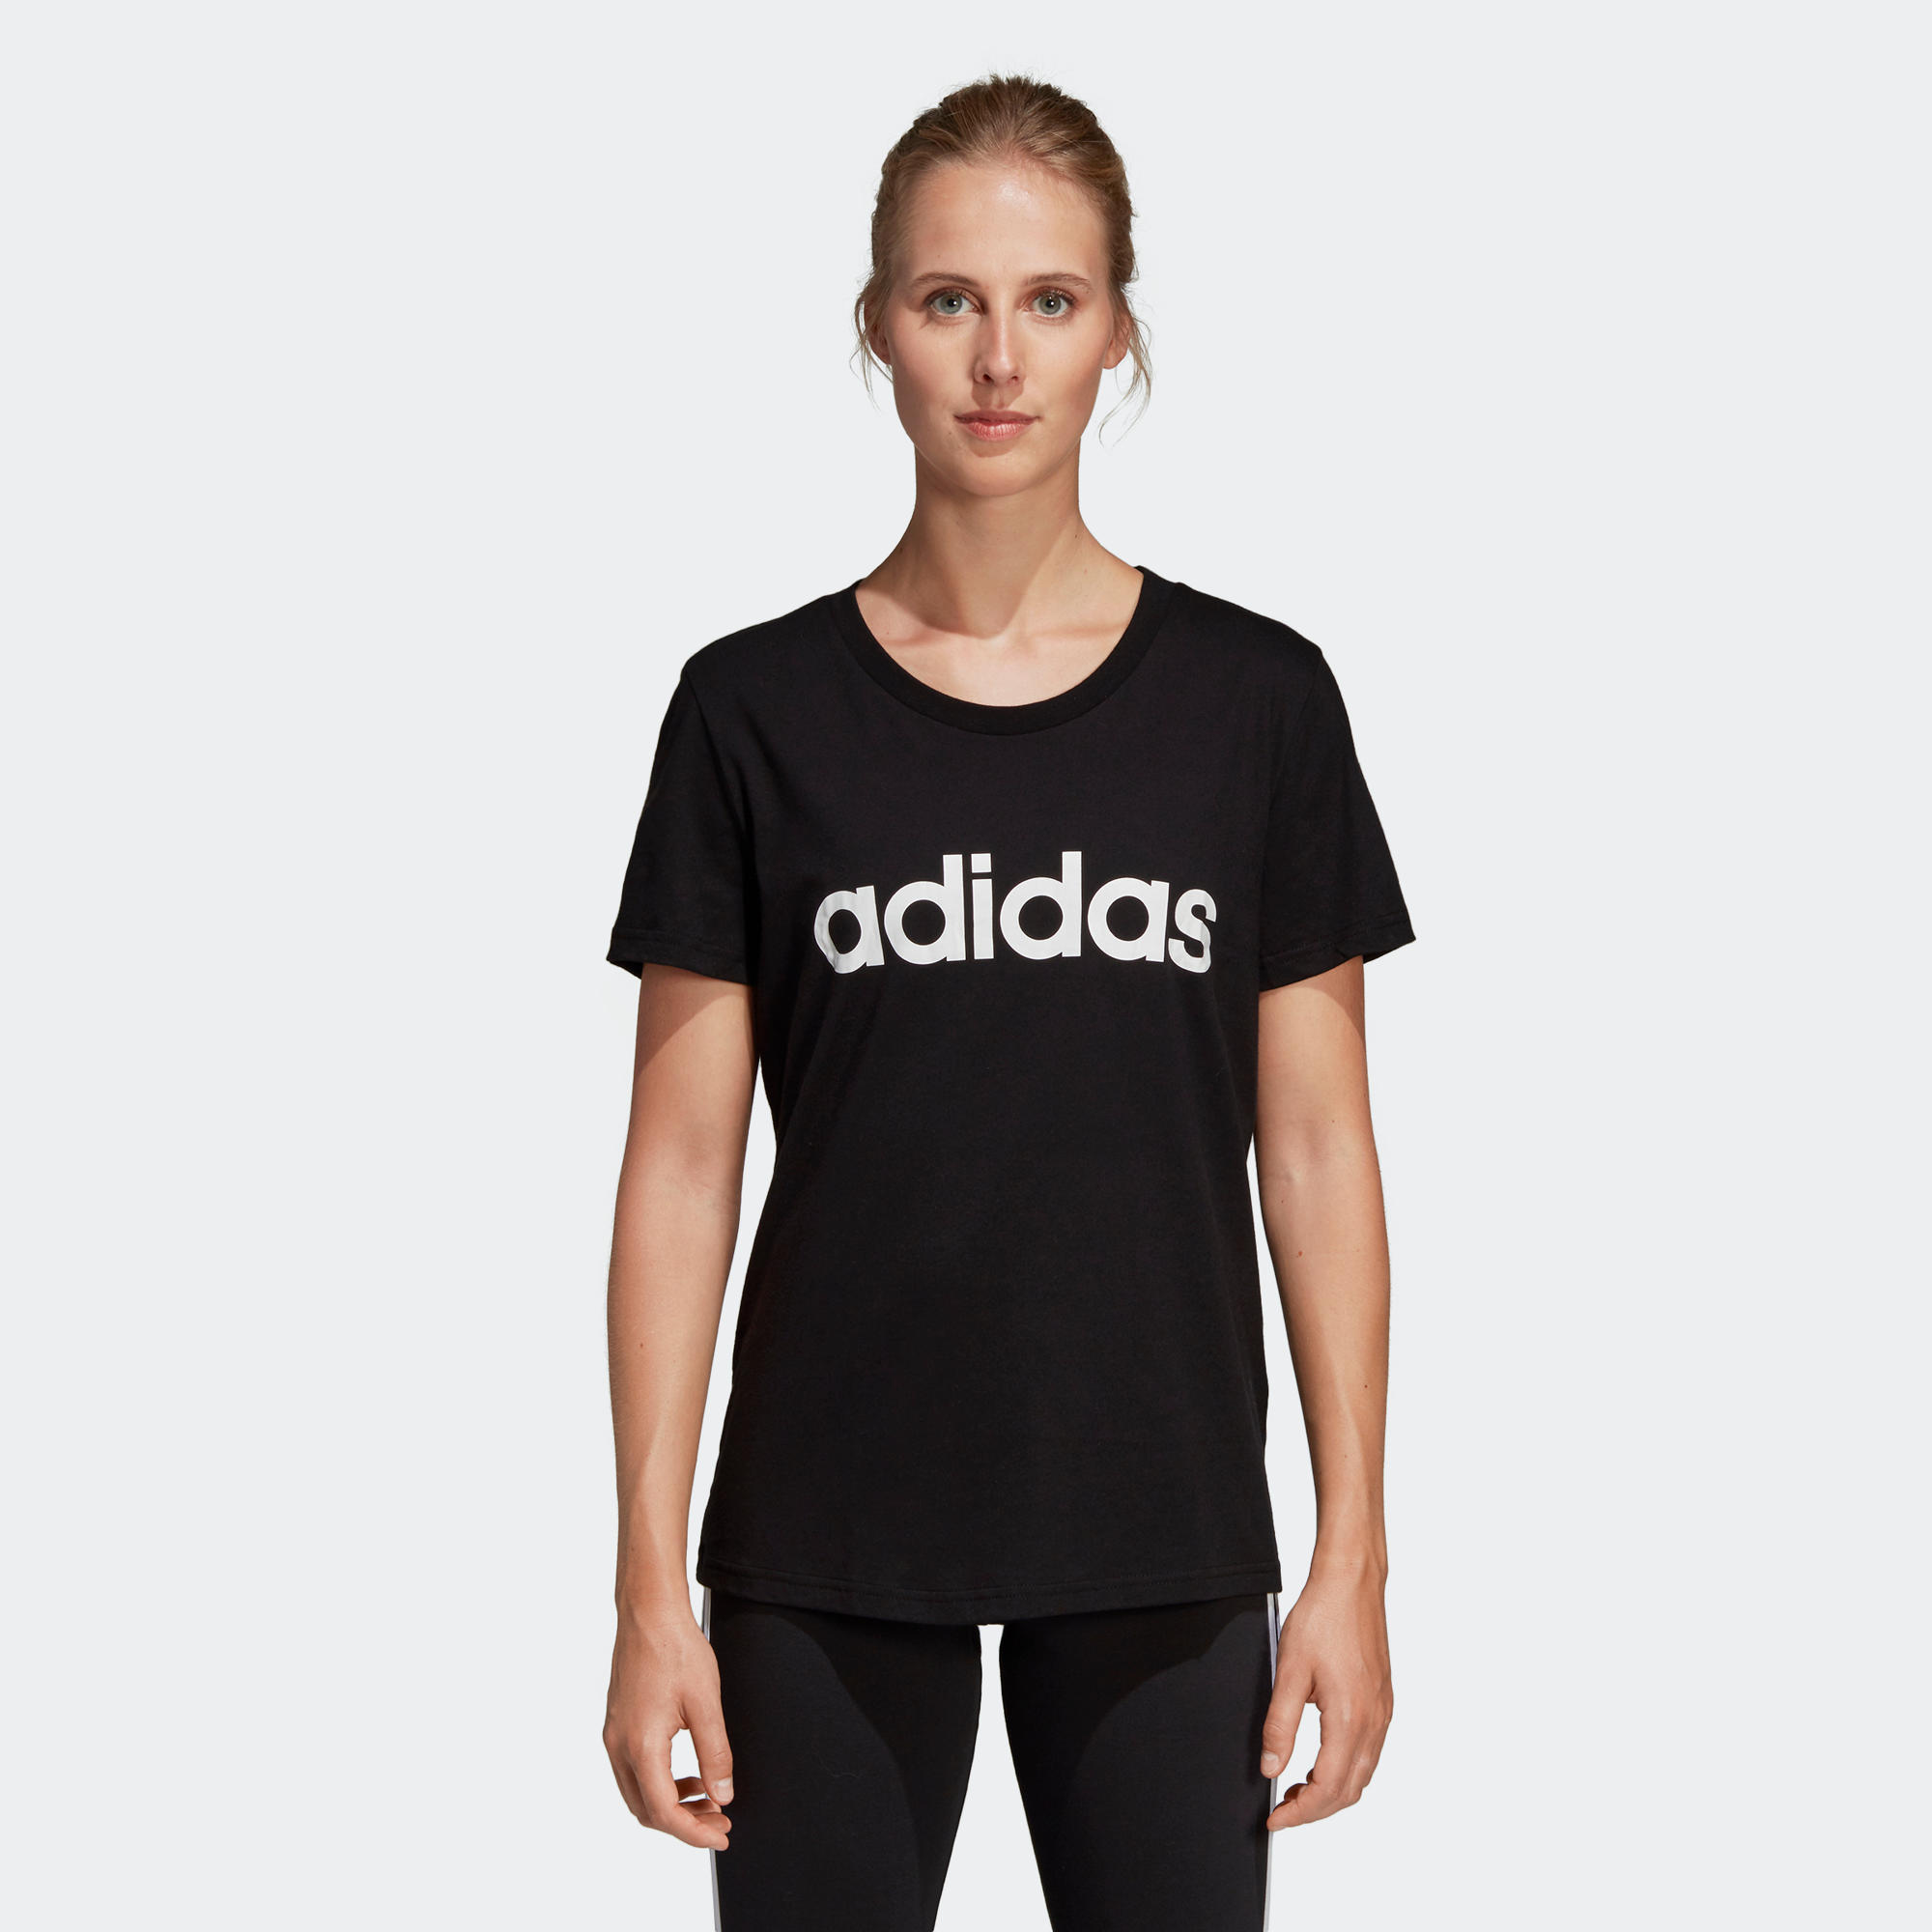 T-Shirt Adidas Femme Noir Imprimé Adidas | Decathlon